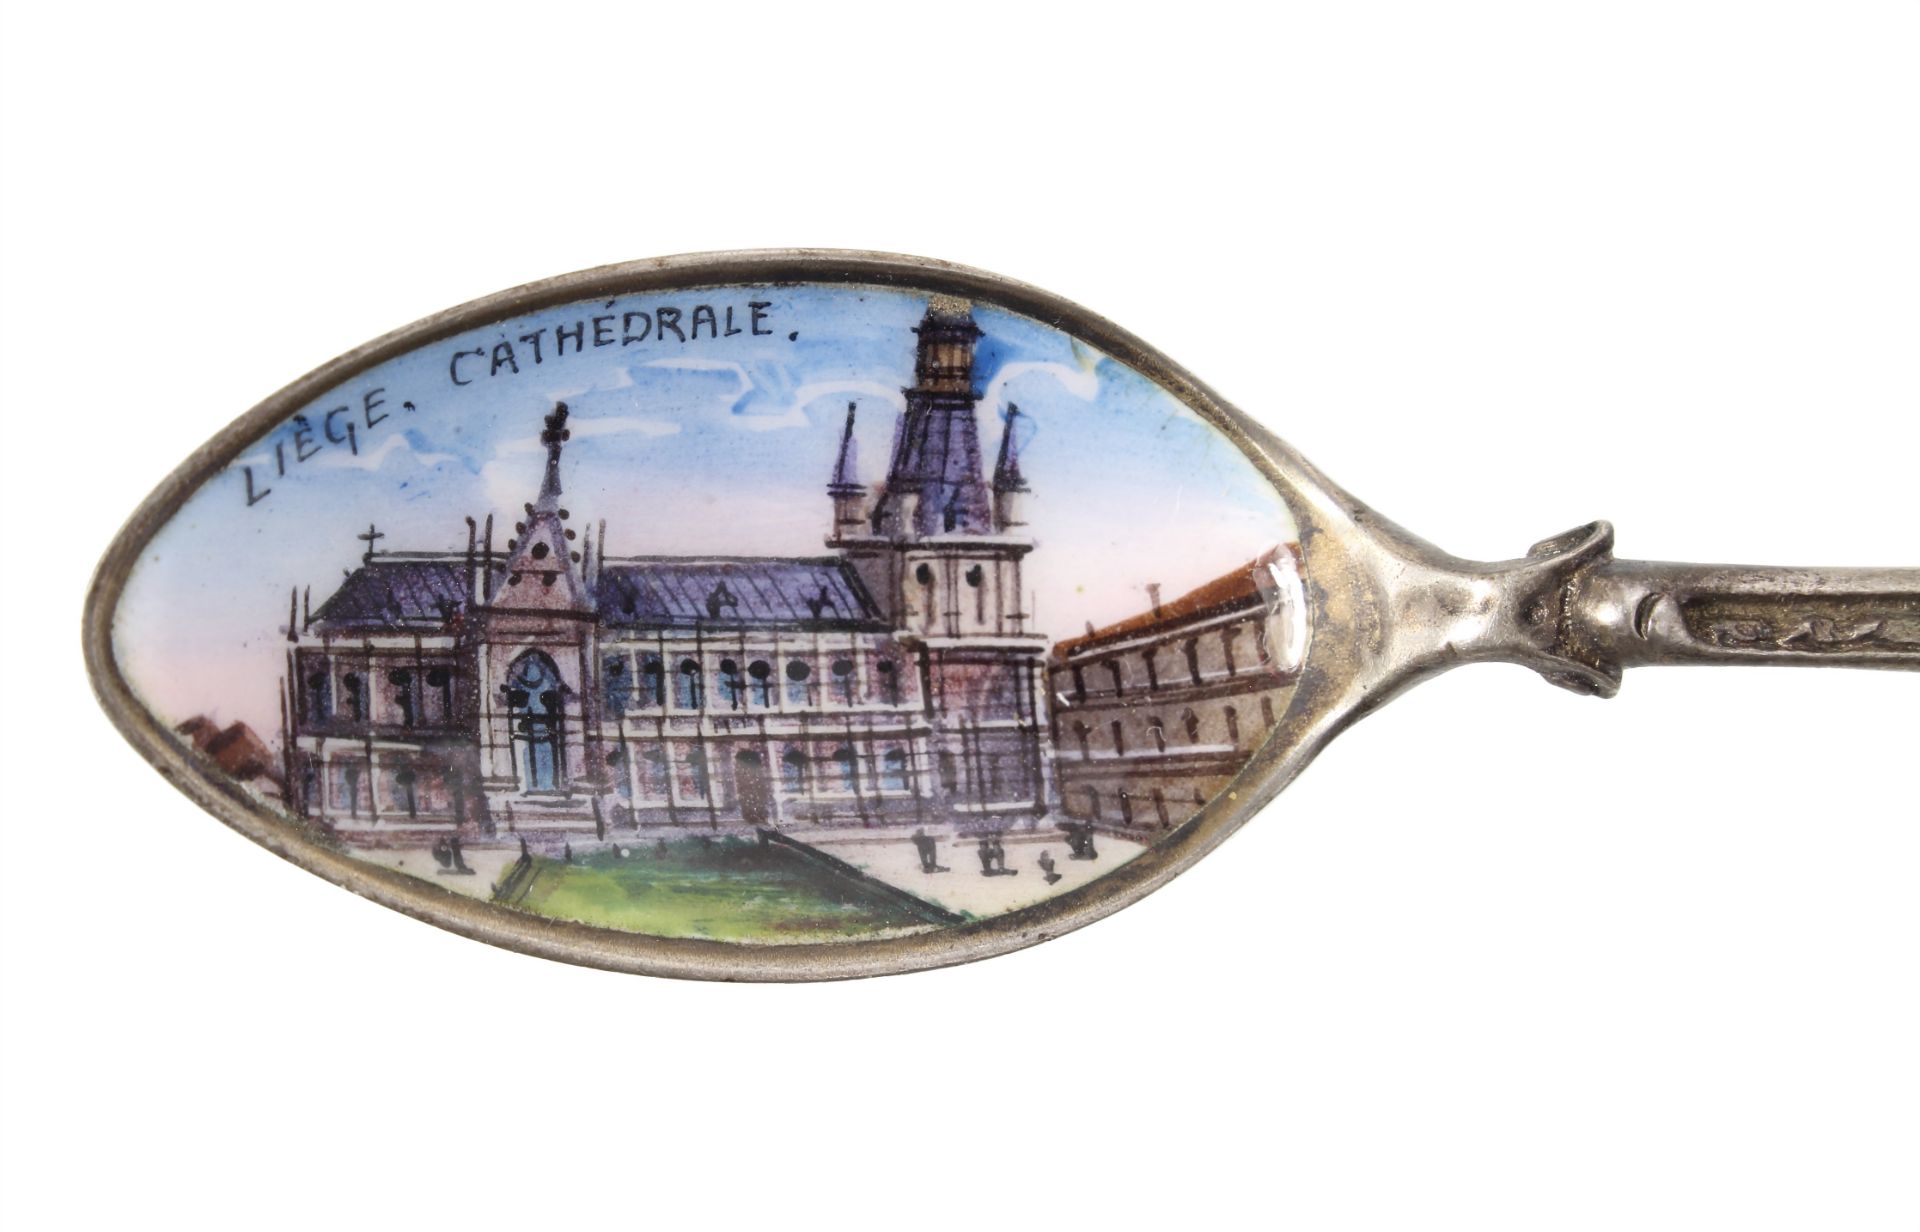 mocha spoon, Vienna around 1900, silver, signed, G.A.S. (Anton Scheid), enamel picture: LIEGE ... - Image 3 of 3